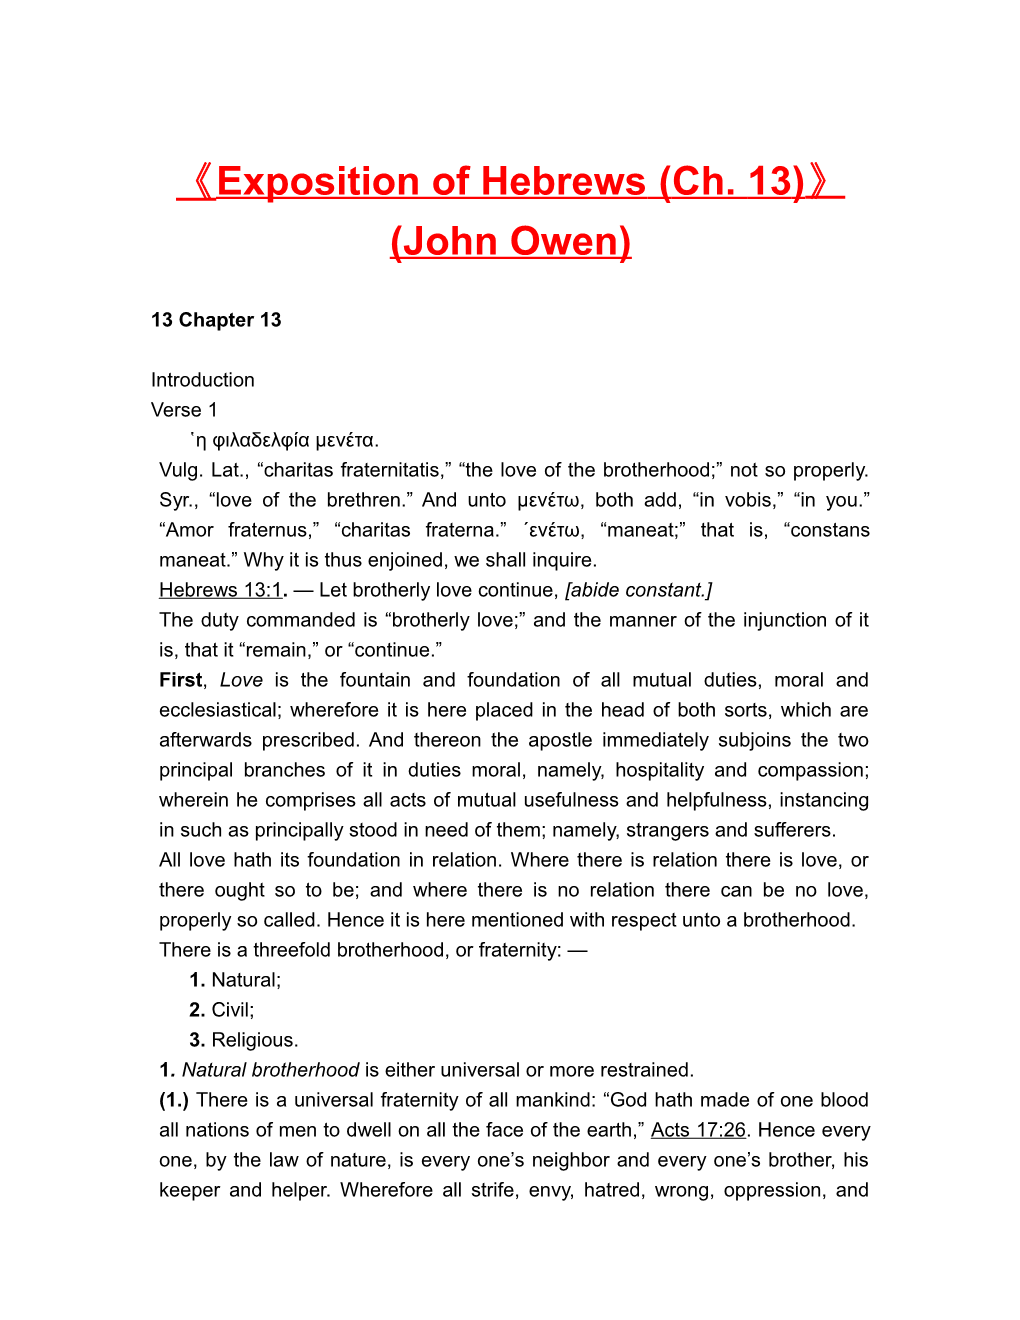 Exposition of Hebrews (Ch. 13) (John Owen)